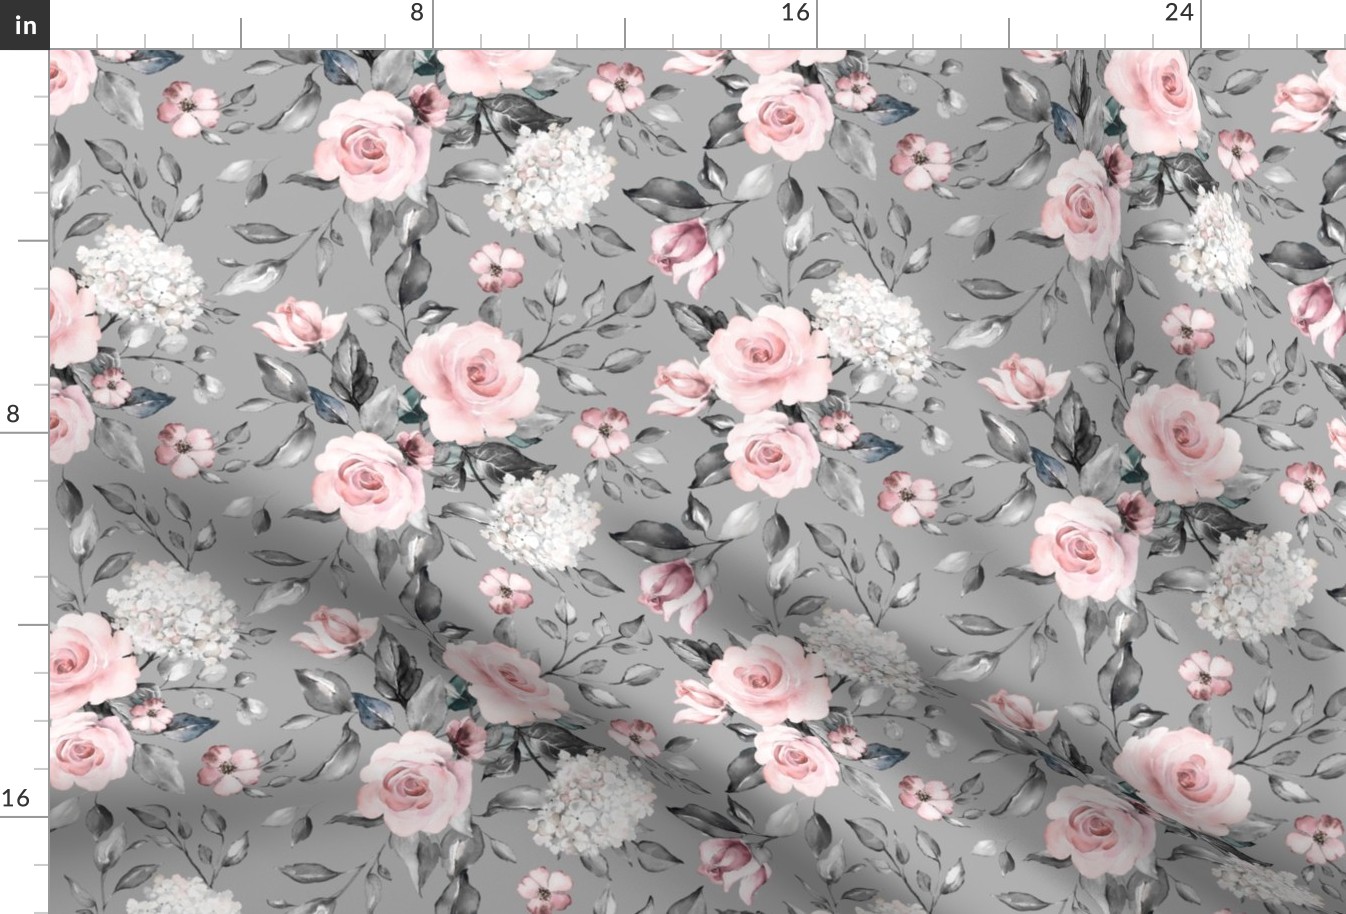 blush rose floral - gray